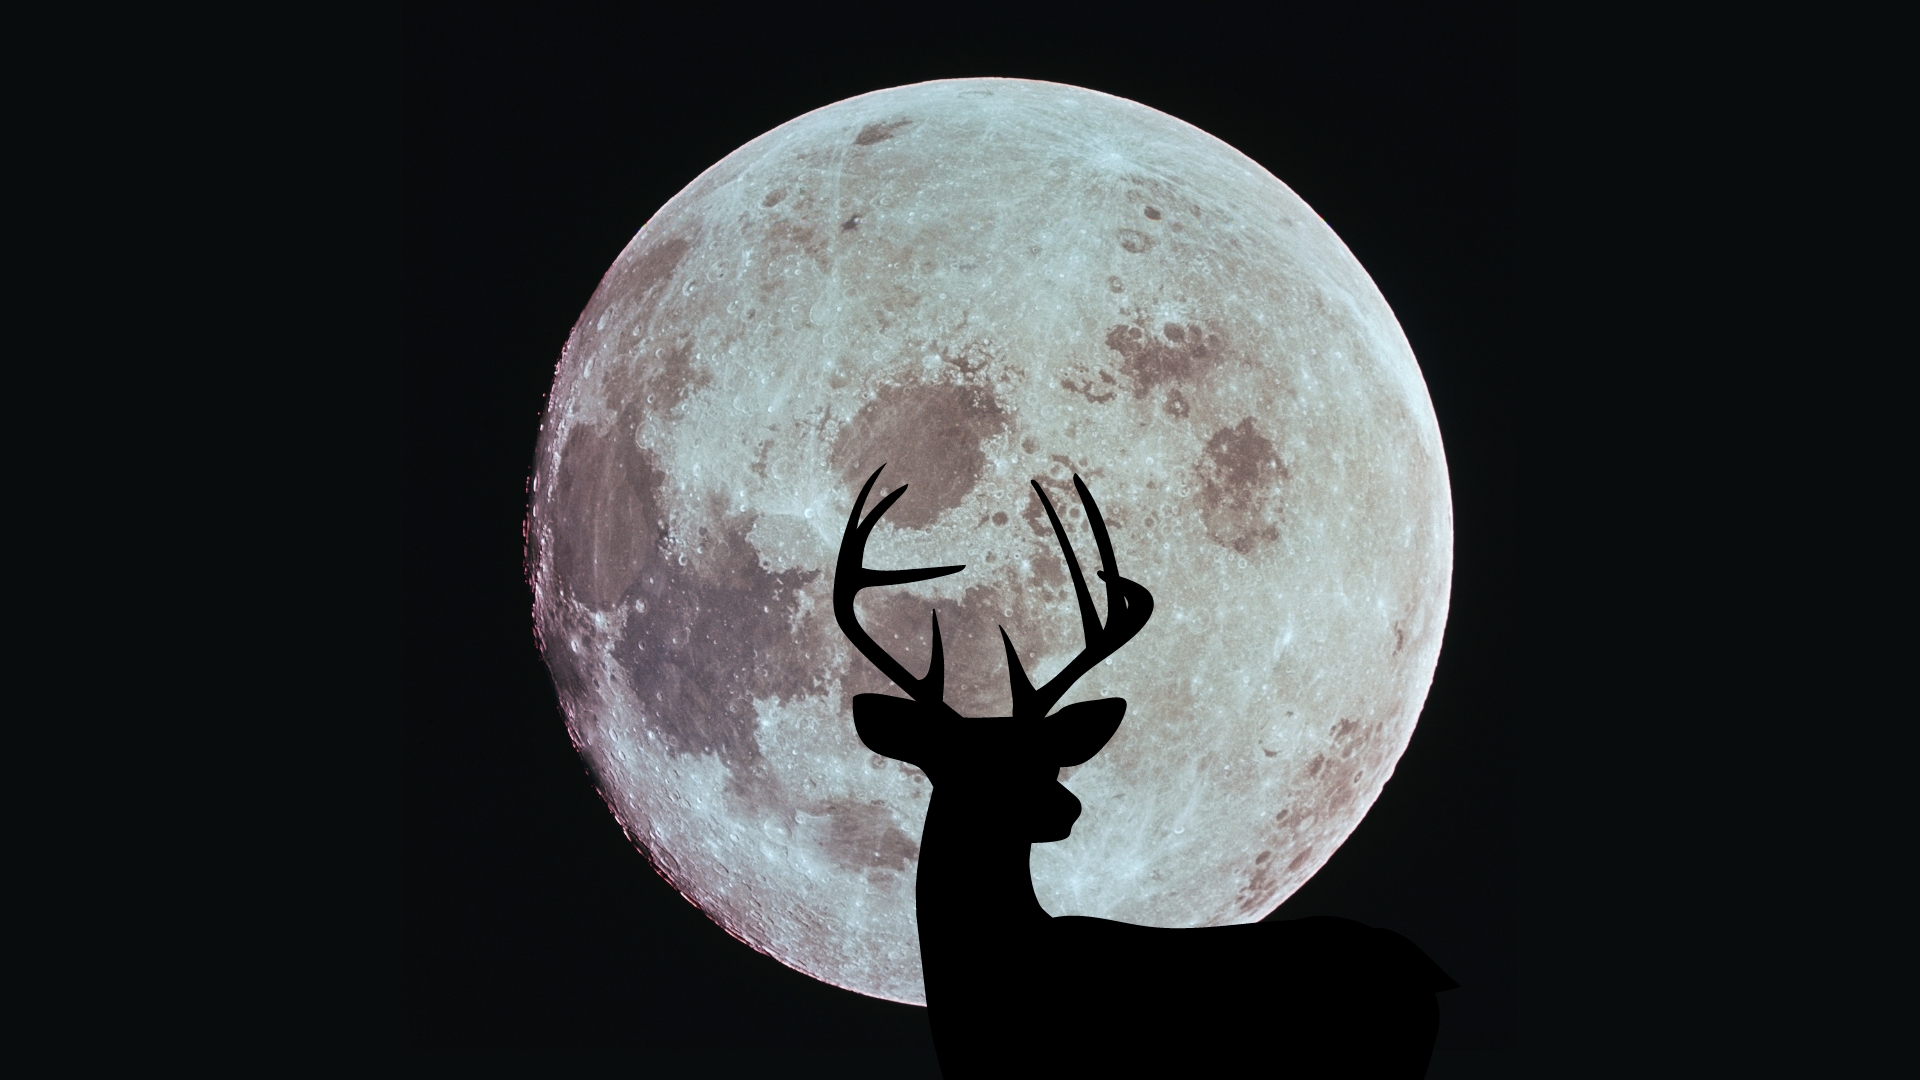  Full Buck Moon shines this weekend on Apollo 11 moon landing anniversary 